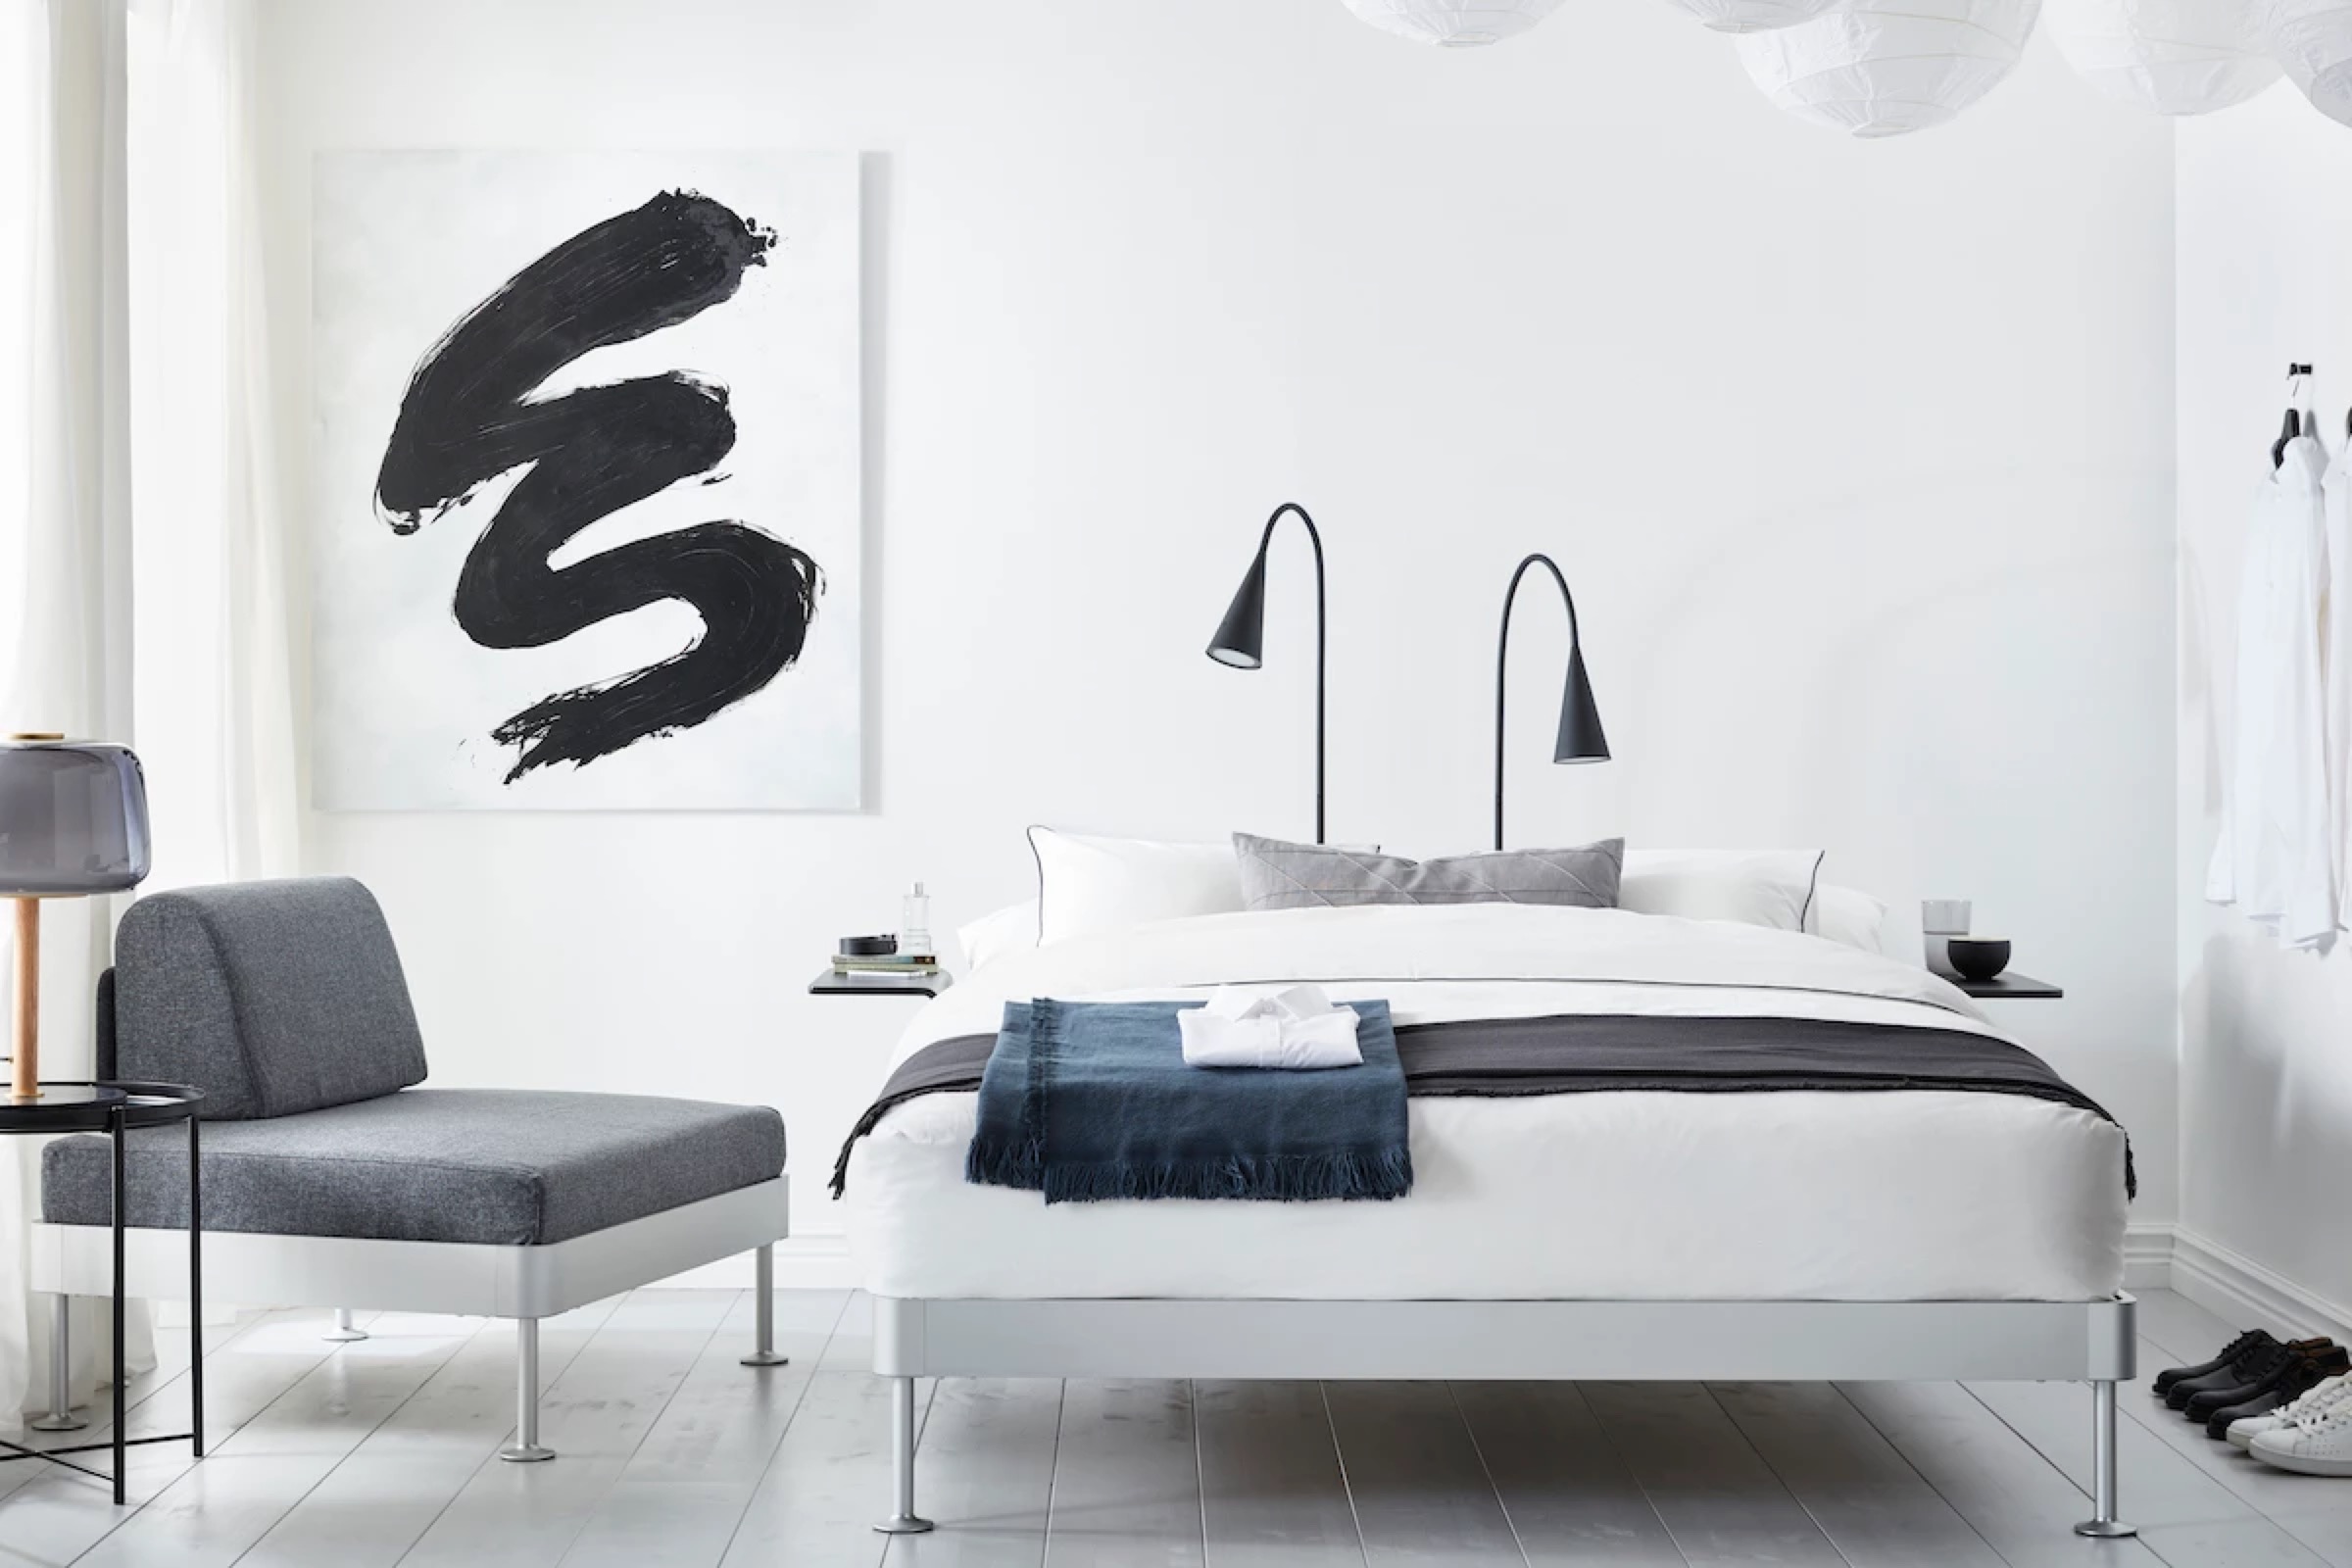 IKEA 与 Tom Dixon 再度联合设计 “DELAKTIG” 睡房家品